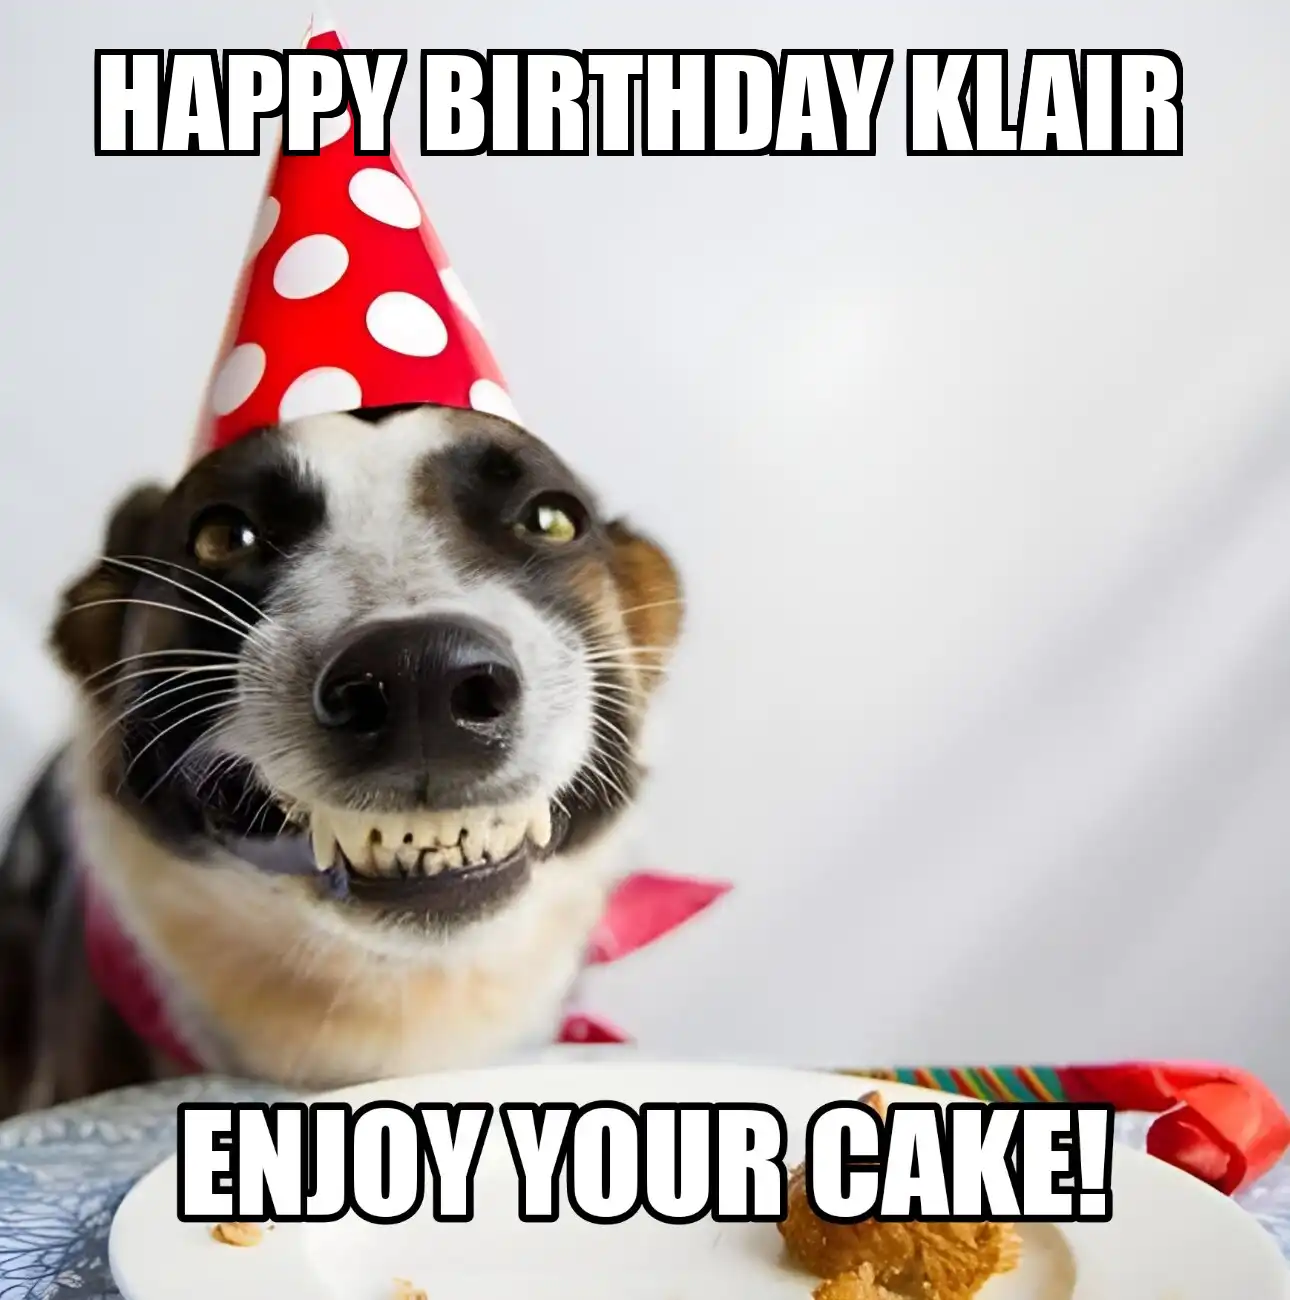 Happy Birthday Klair Enjoy Your Cake Dog Meme